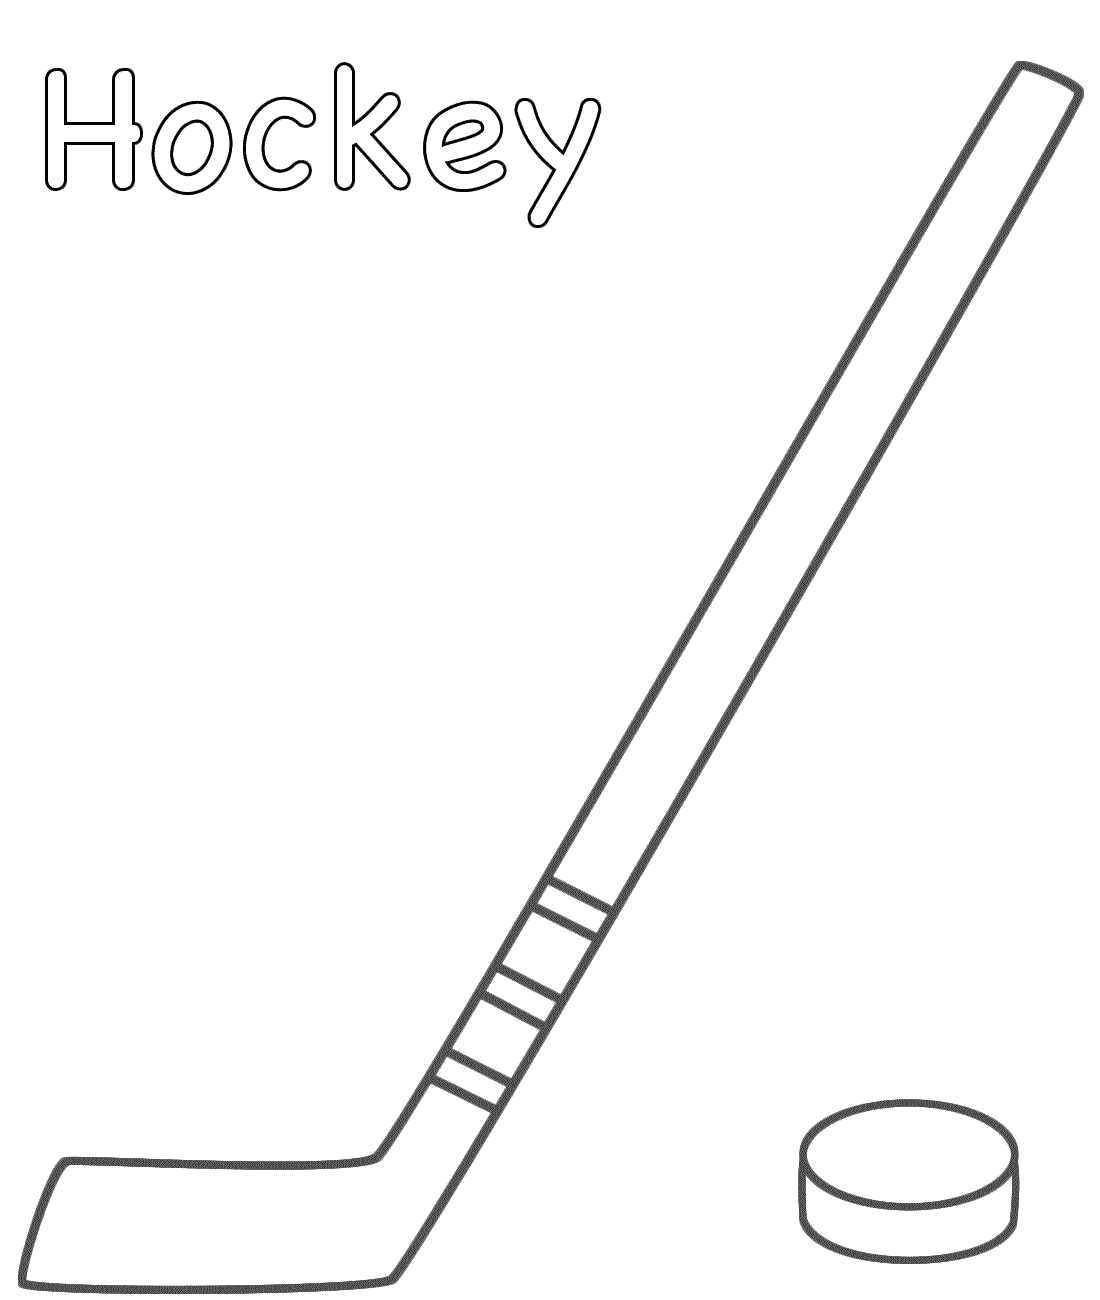 ... Crossed hockey sticks cli